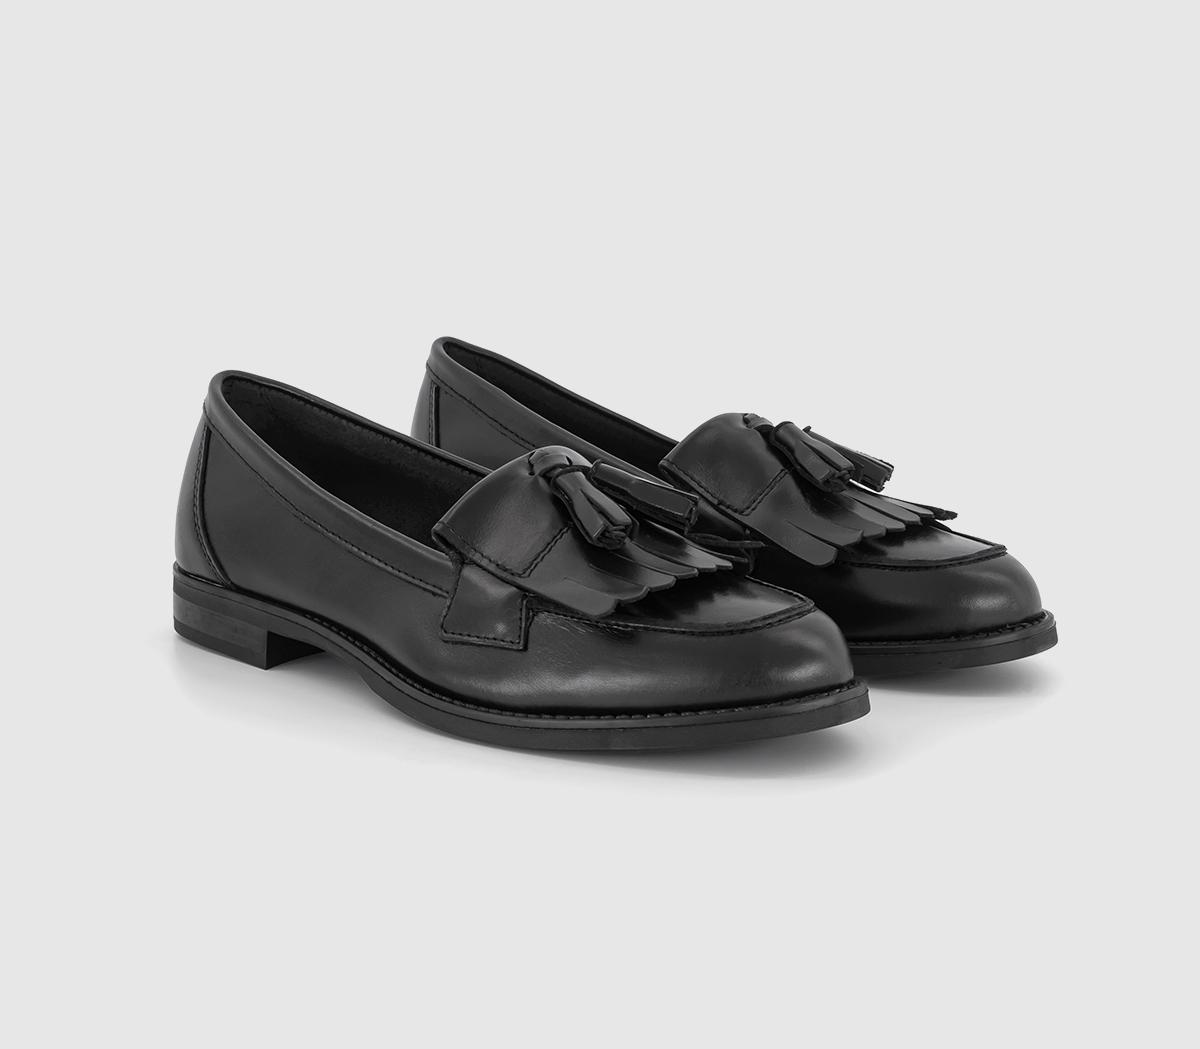 OFFICE Womens Fitz Tassle Fringe Loafers Black Leather, 7